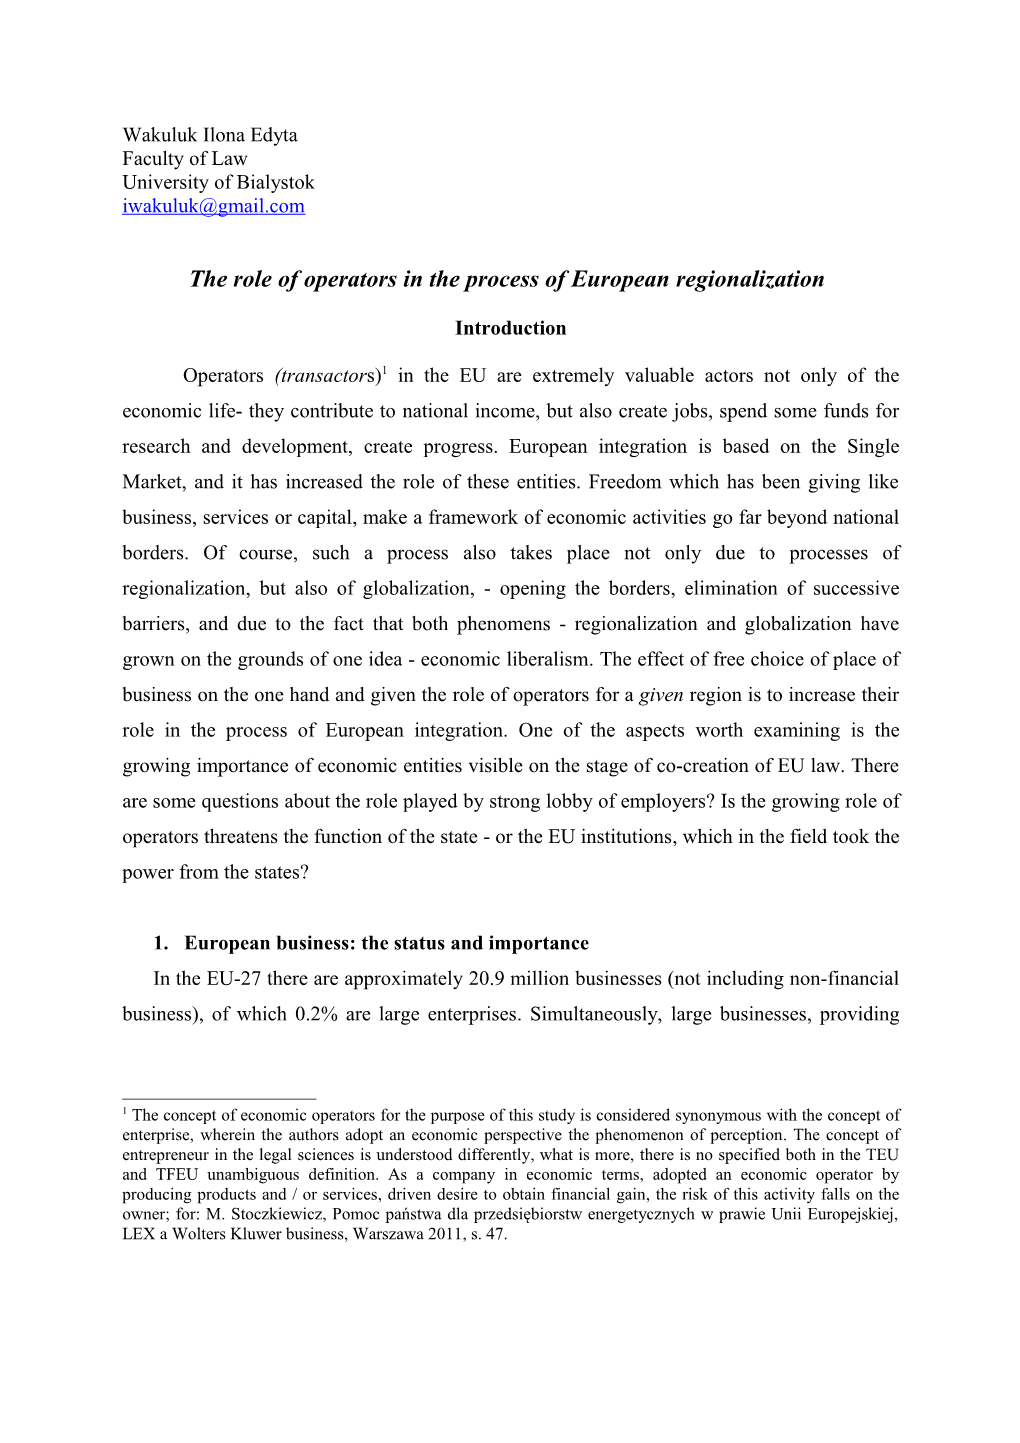 The Roleof Operators in the Process Ofeuropean Regionalization